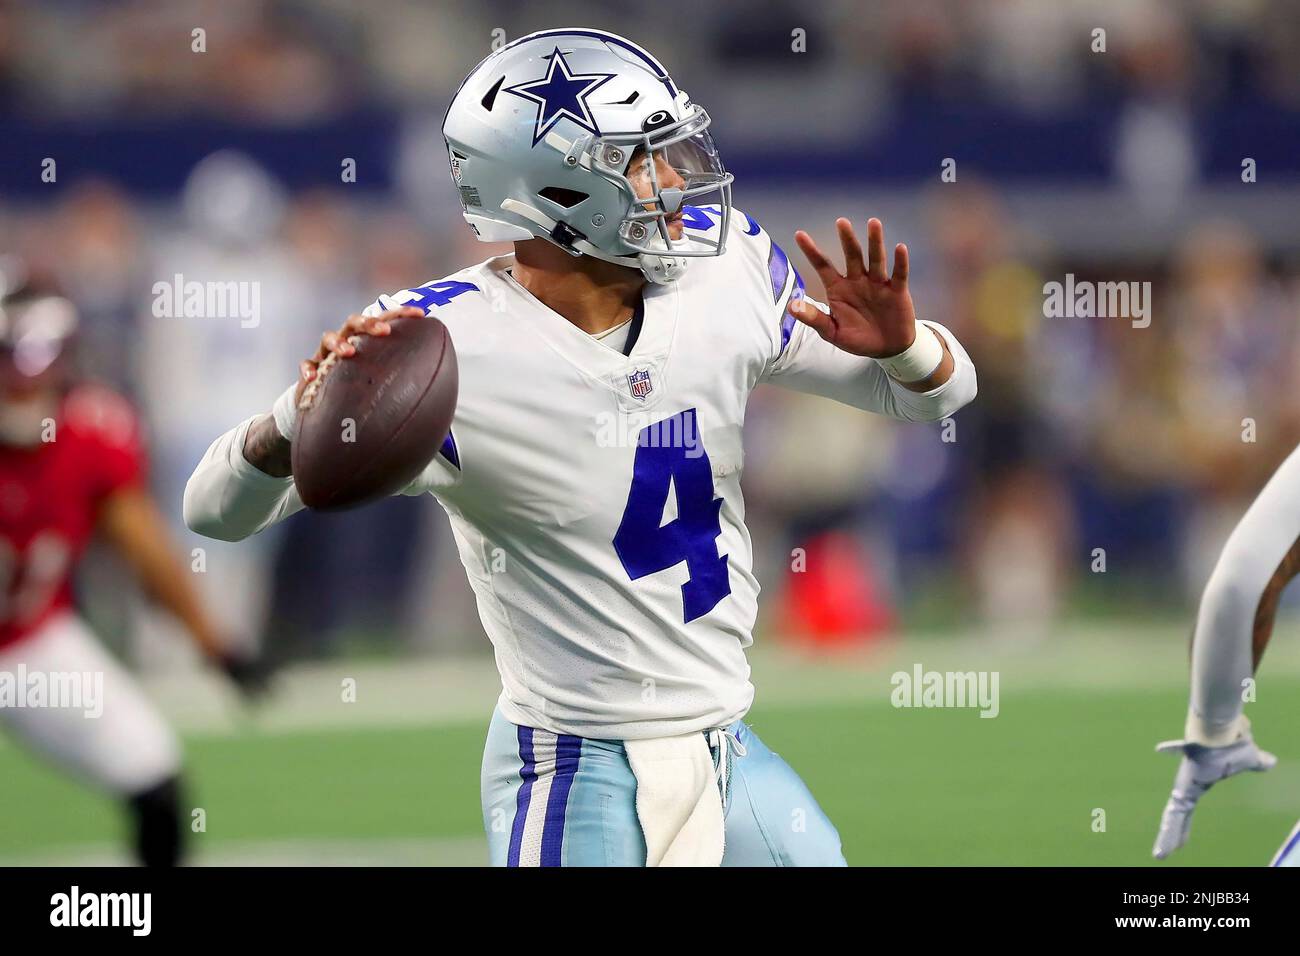 ARLINGTON, TX - SEPTEMBER 11: Dallas Cowboys Quarterback Dak